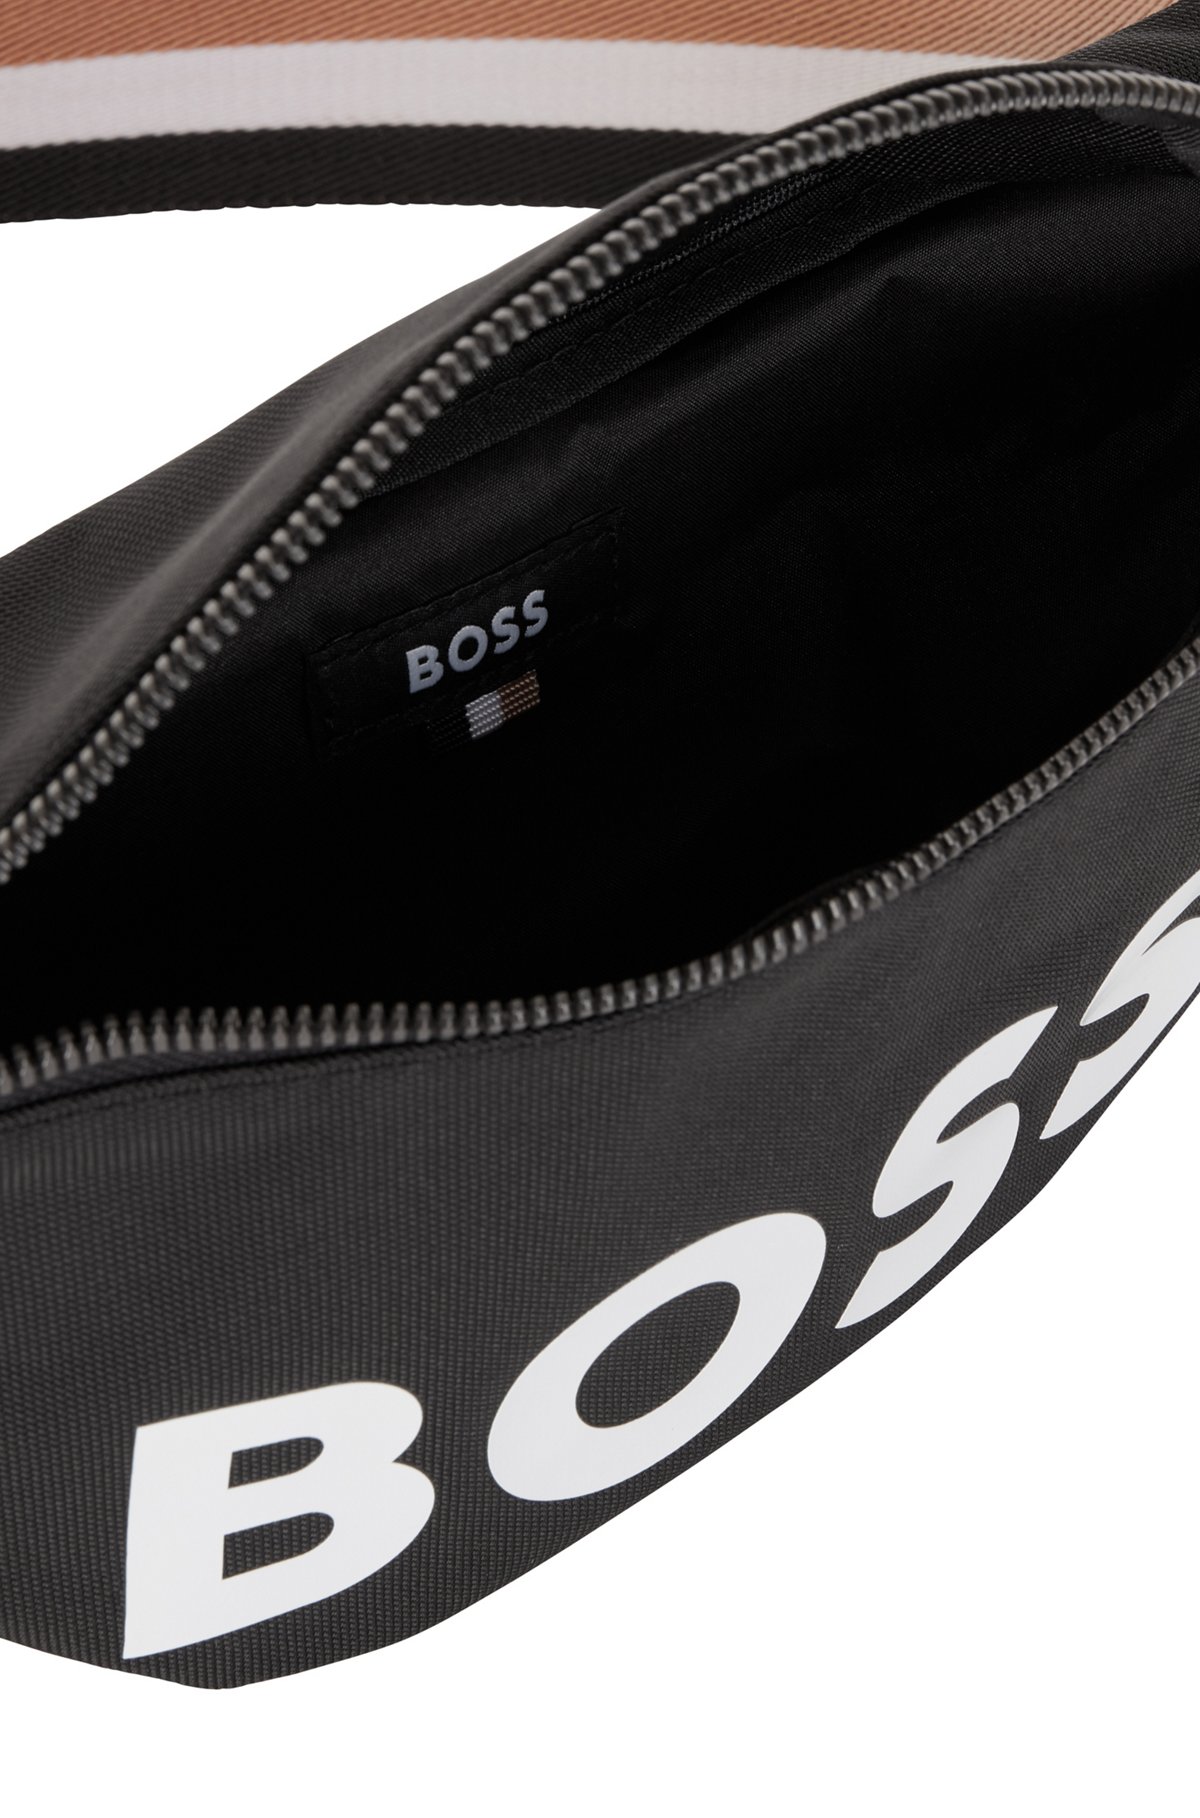 Recycled-nylon belt bag with tonal logo, Black